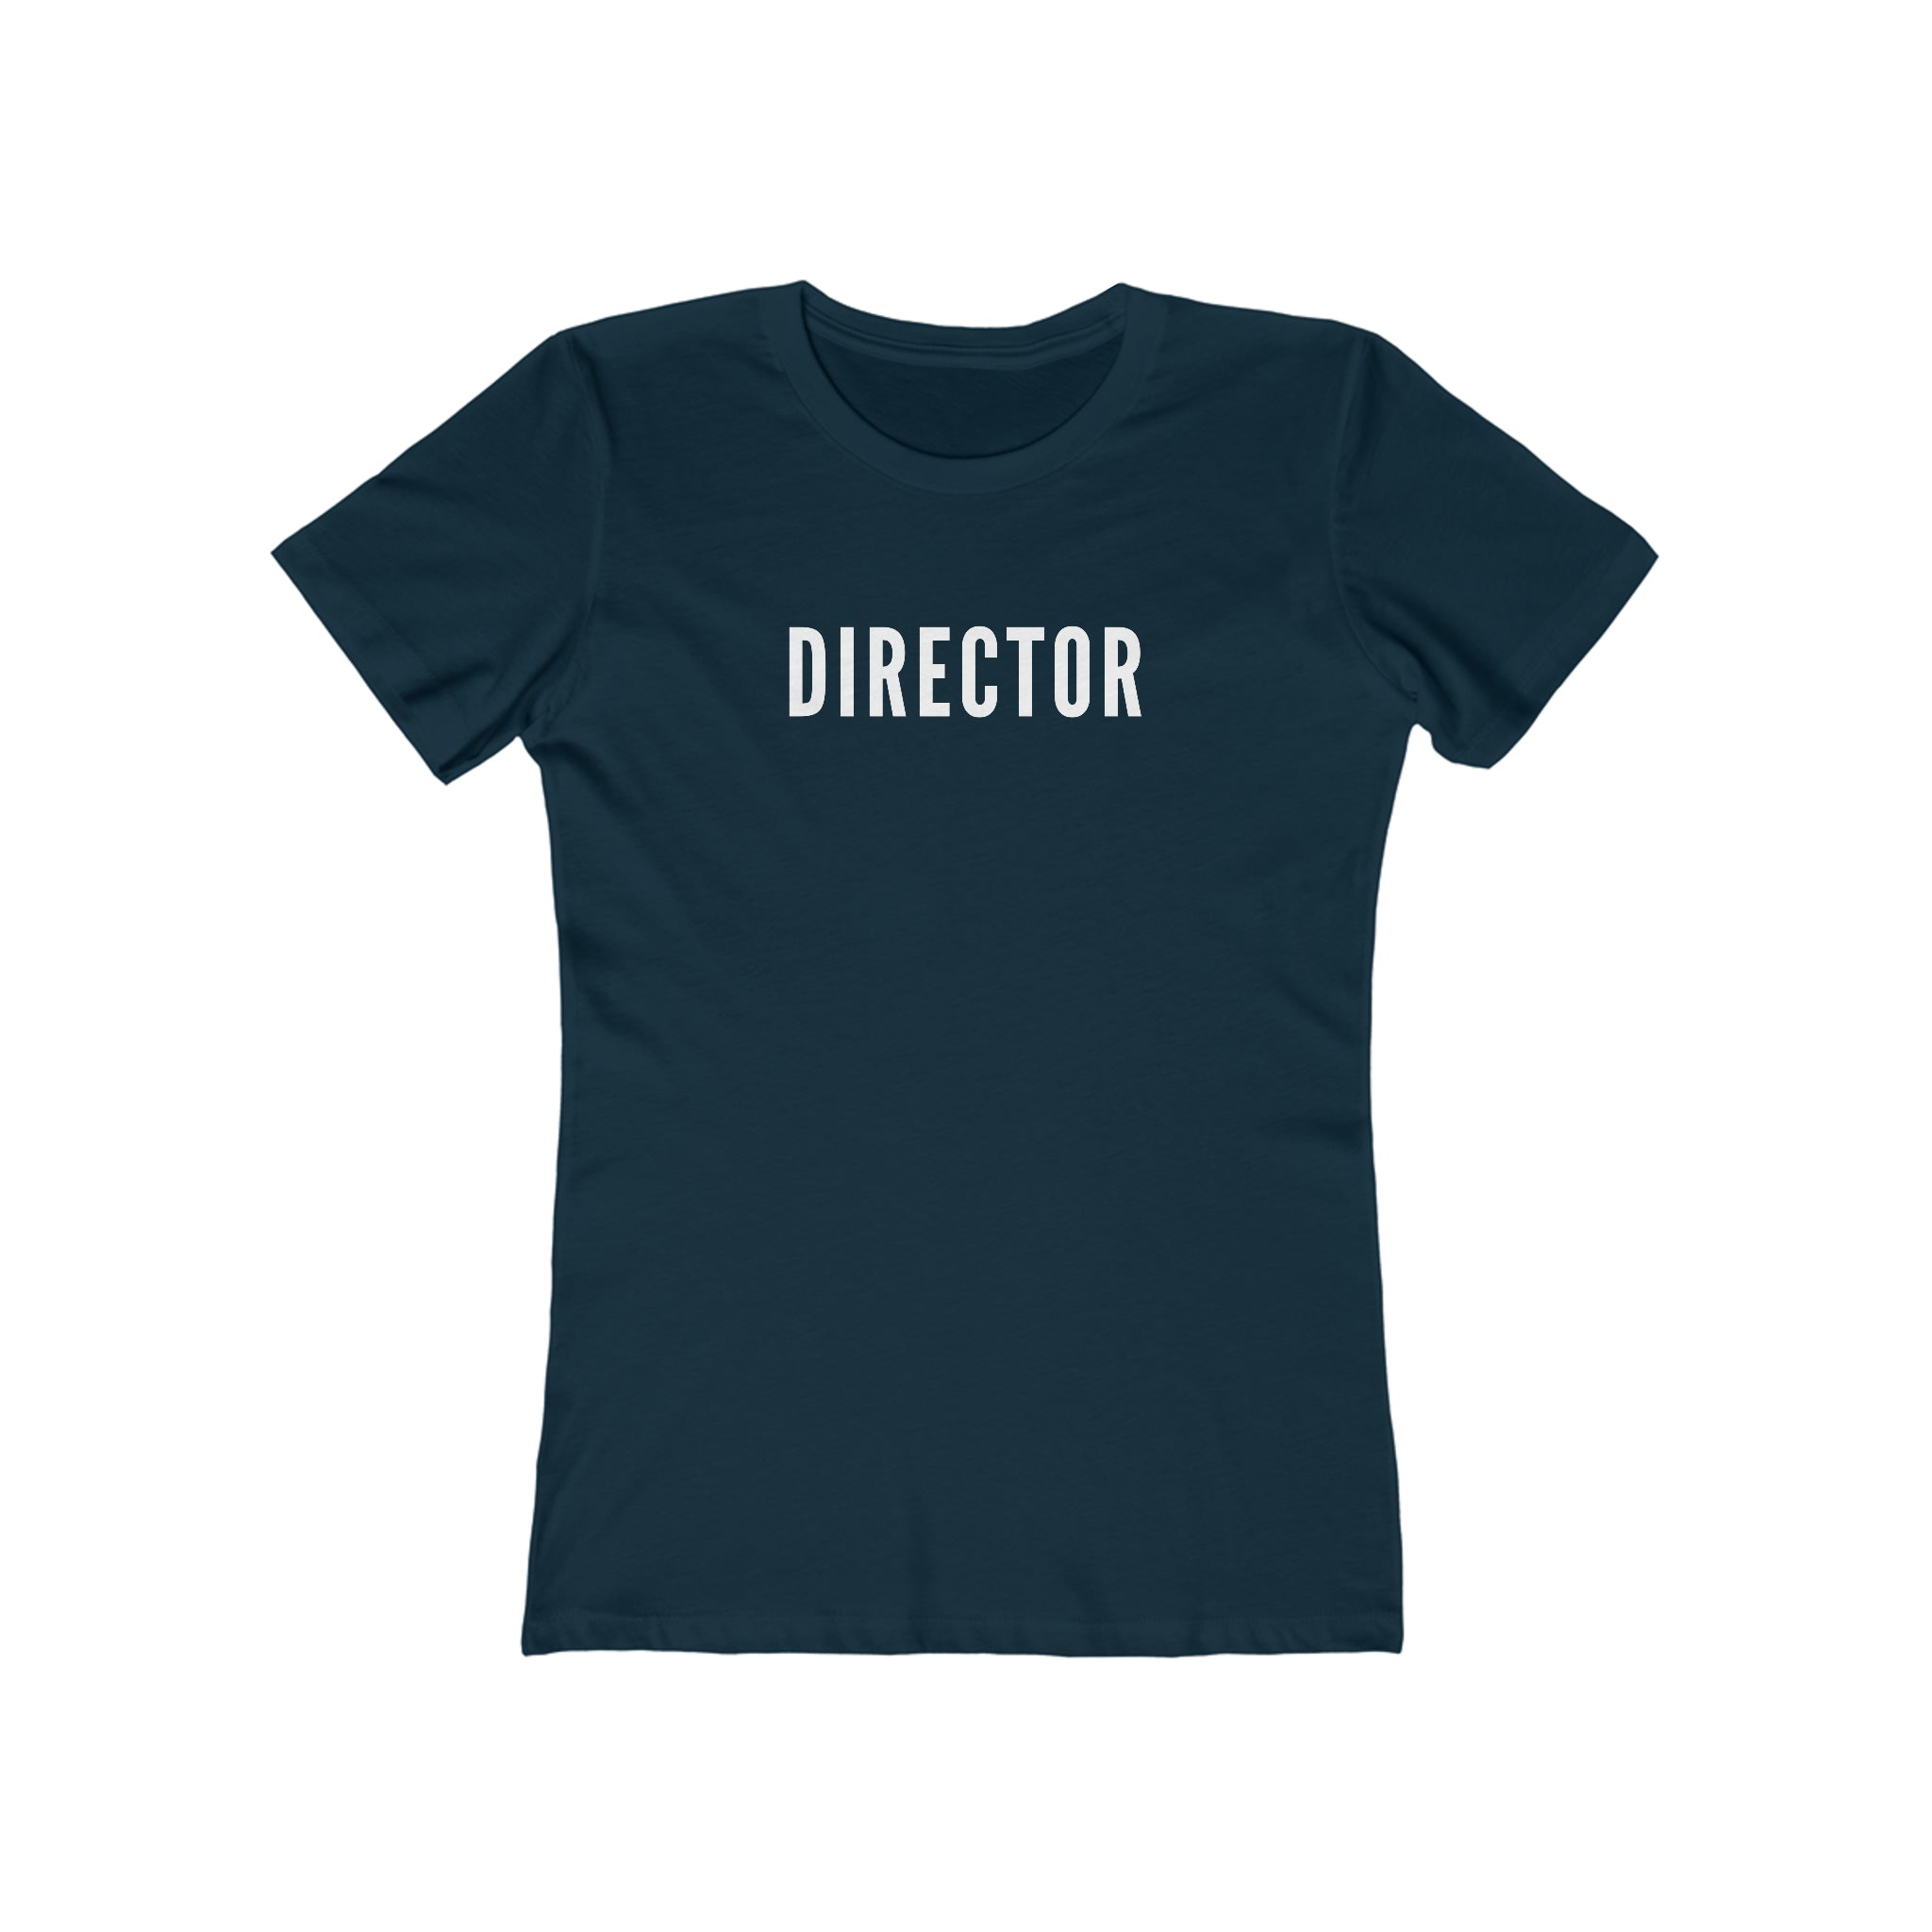 "Director" t-shirt - Slim fit